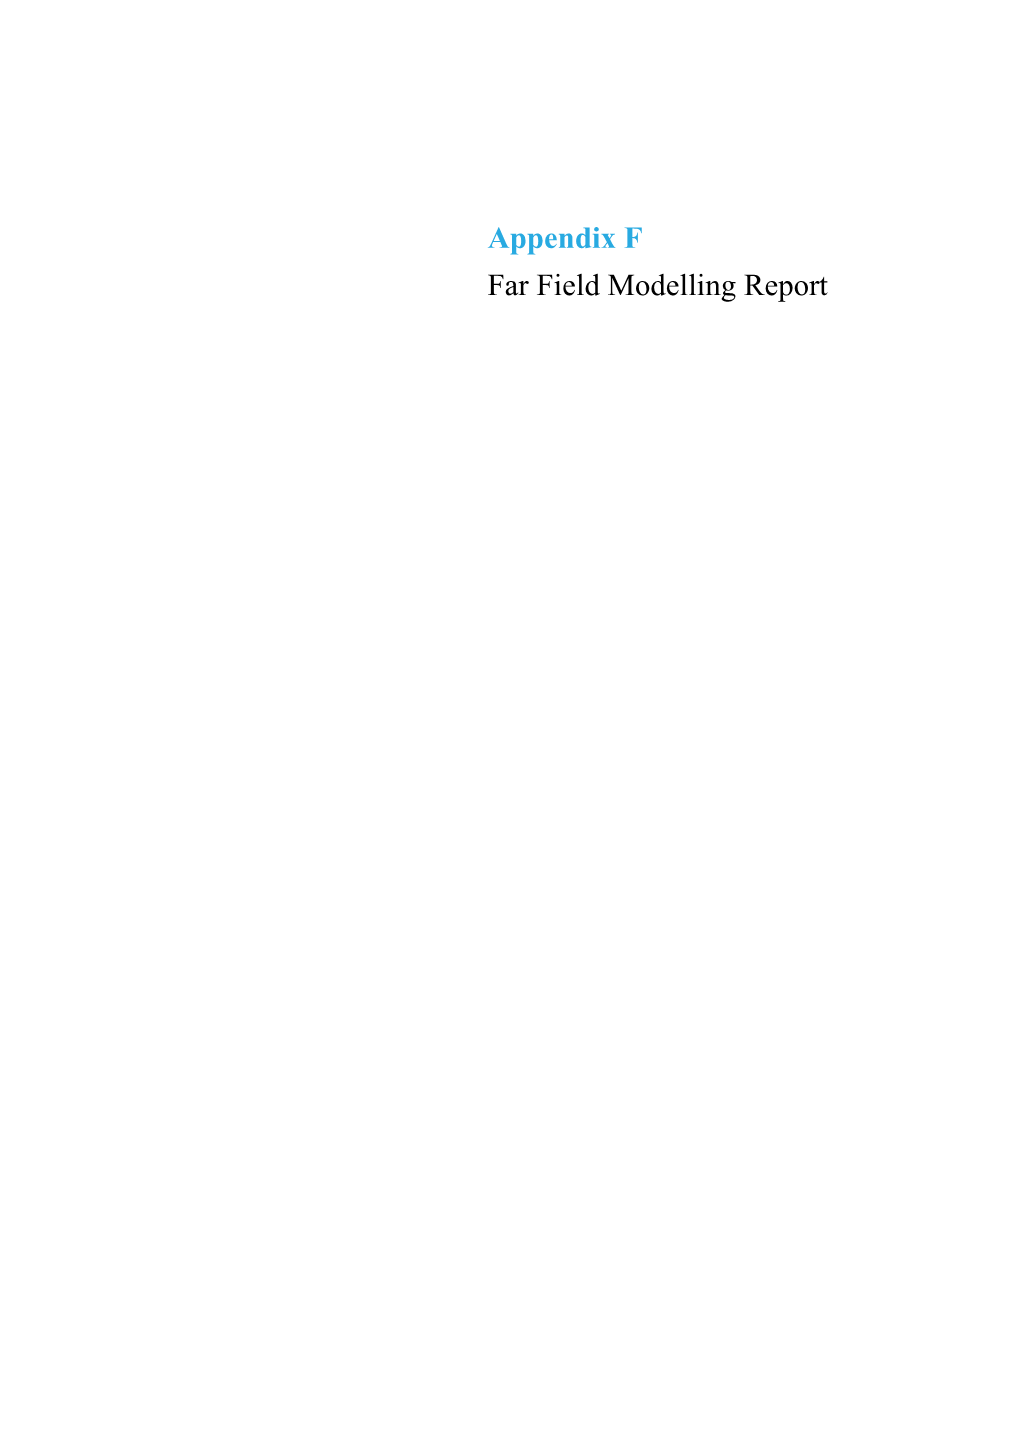 Appendix F Far Field Modelling Report